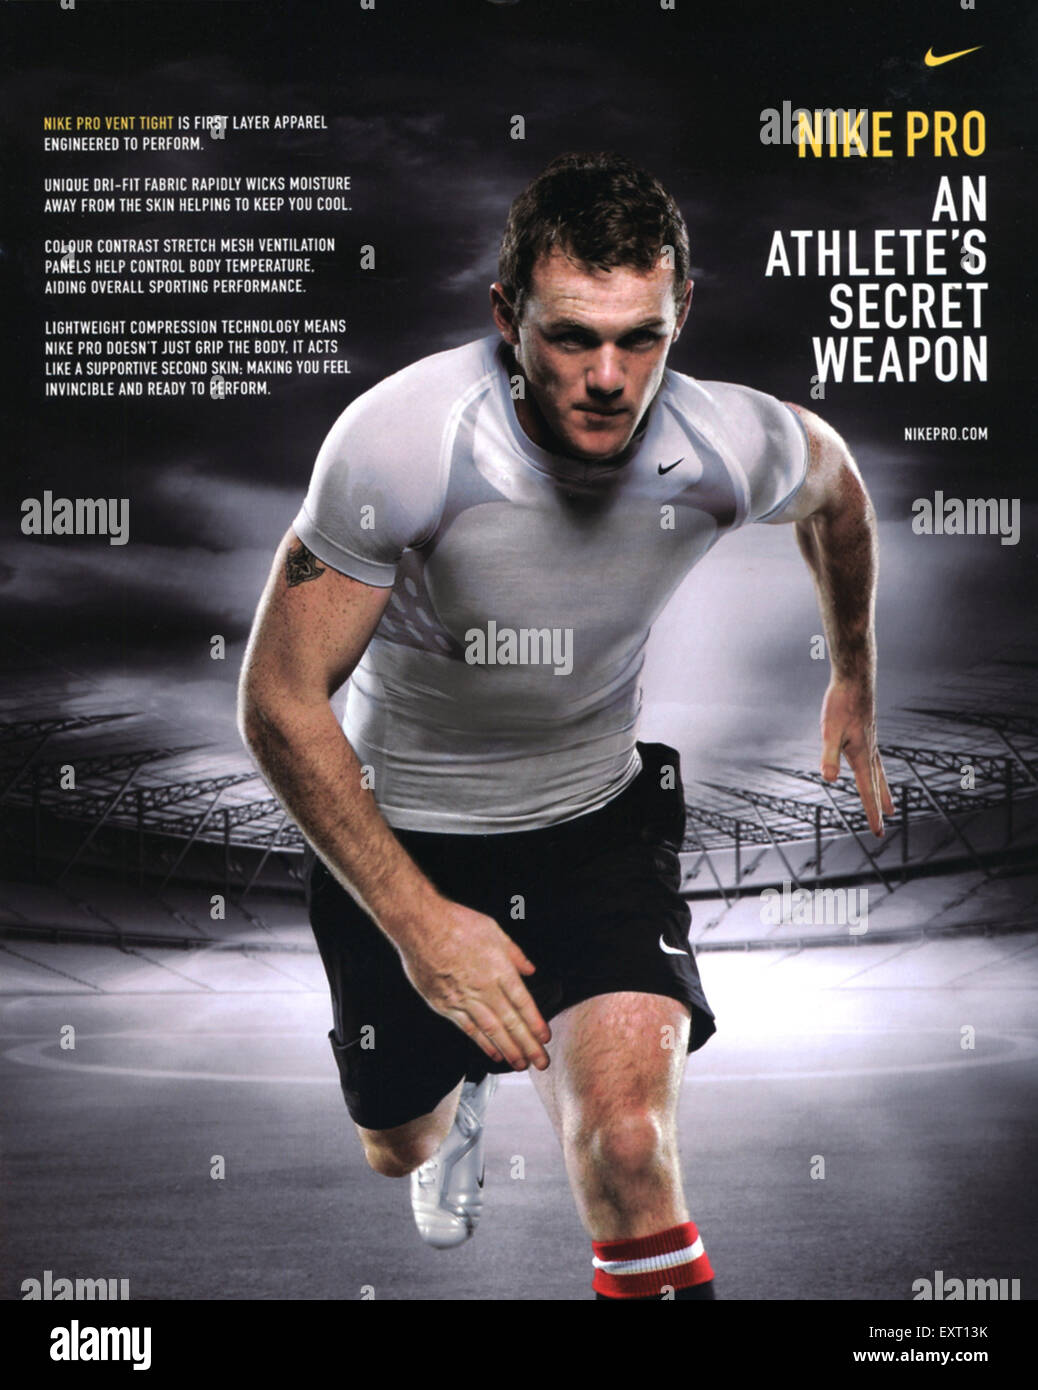 2000s UK Nike Pro Magazine Advert Stock Photo - Alamy